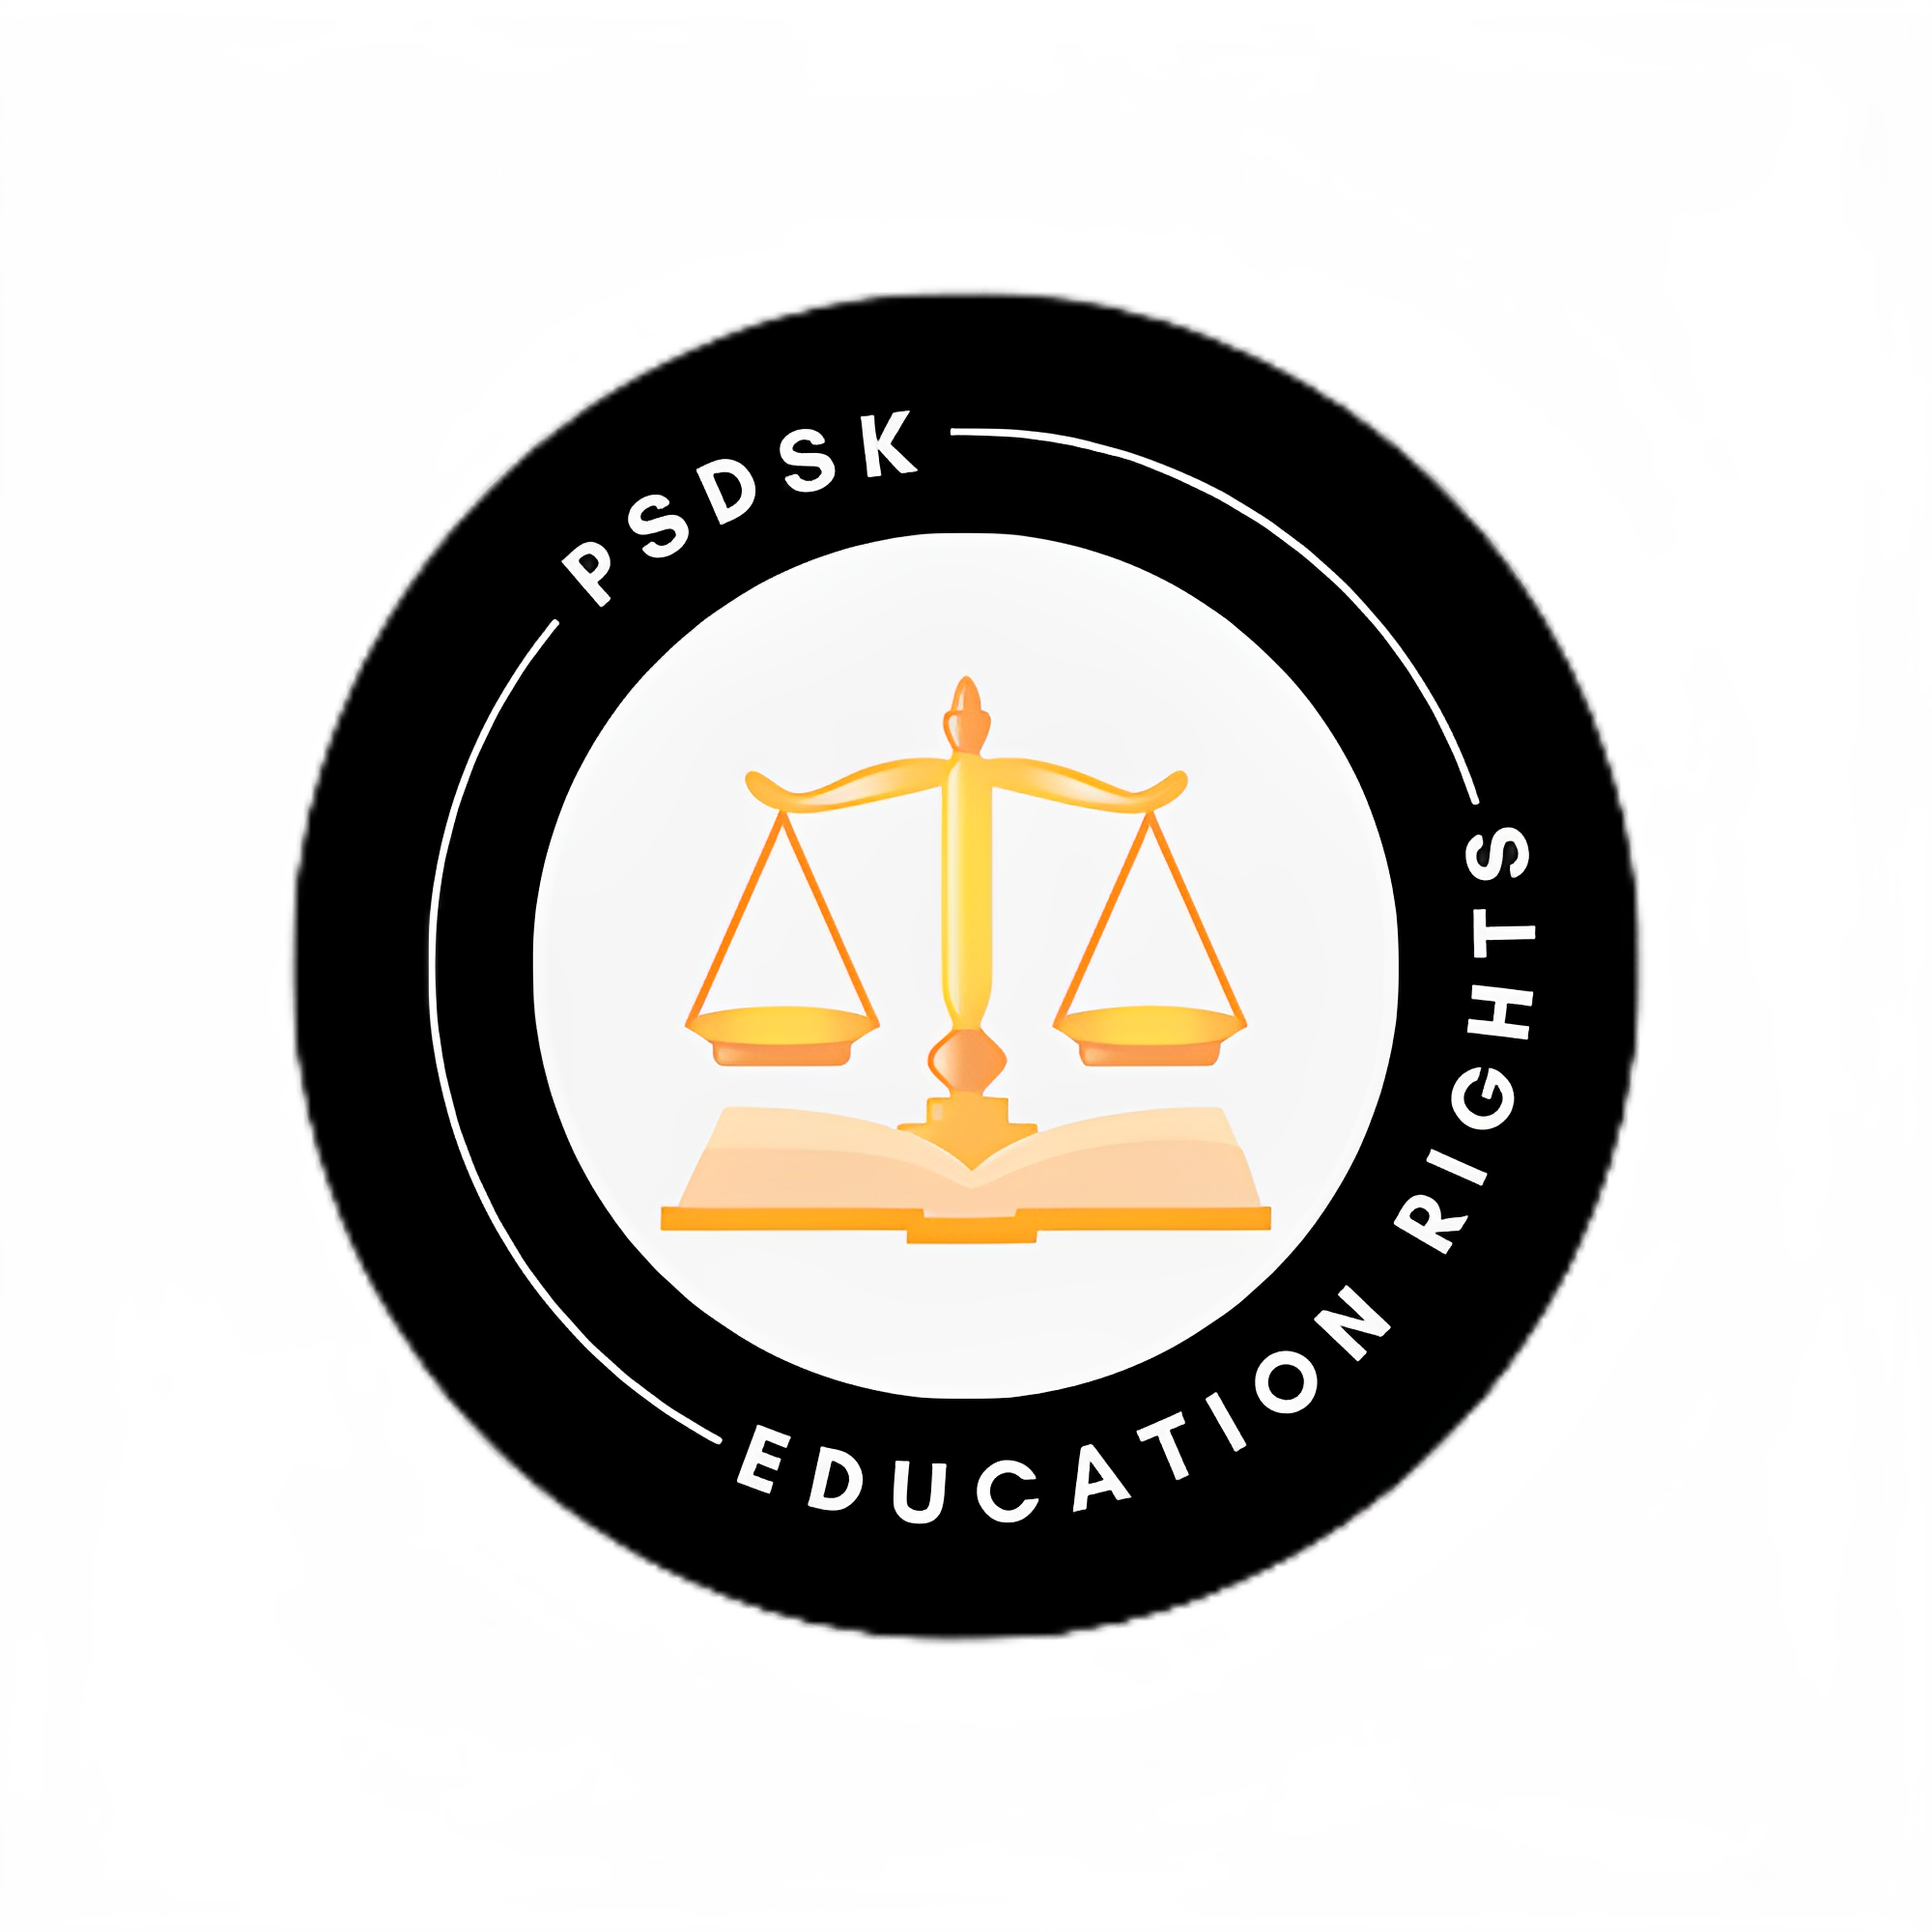 PSDSK Education Rights